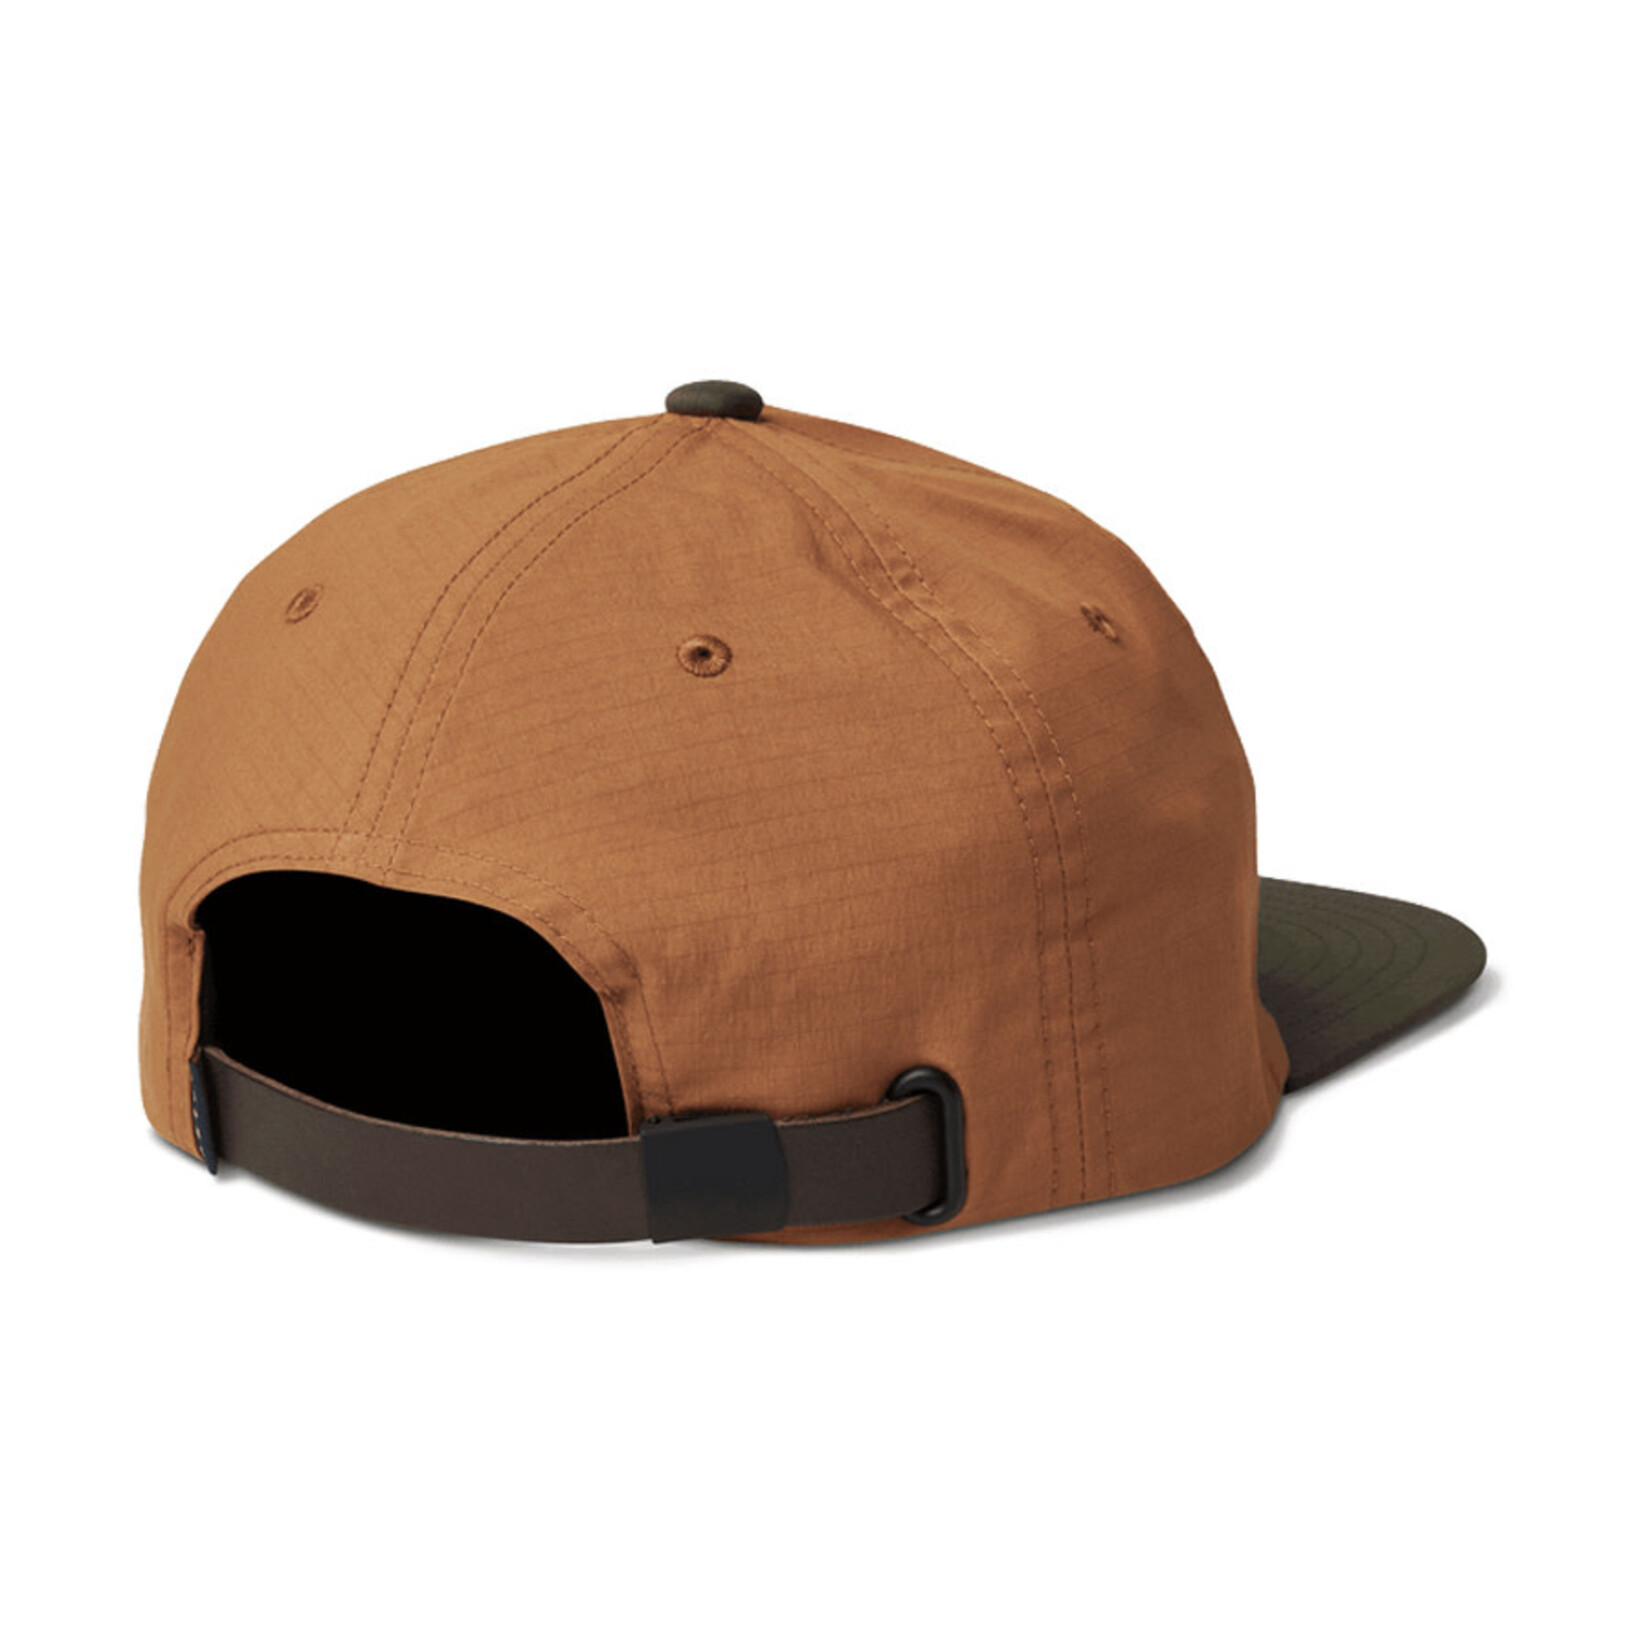 Roark Campover Hat - Military/Pignoli